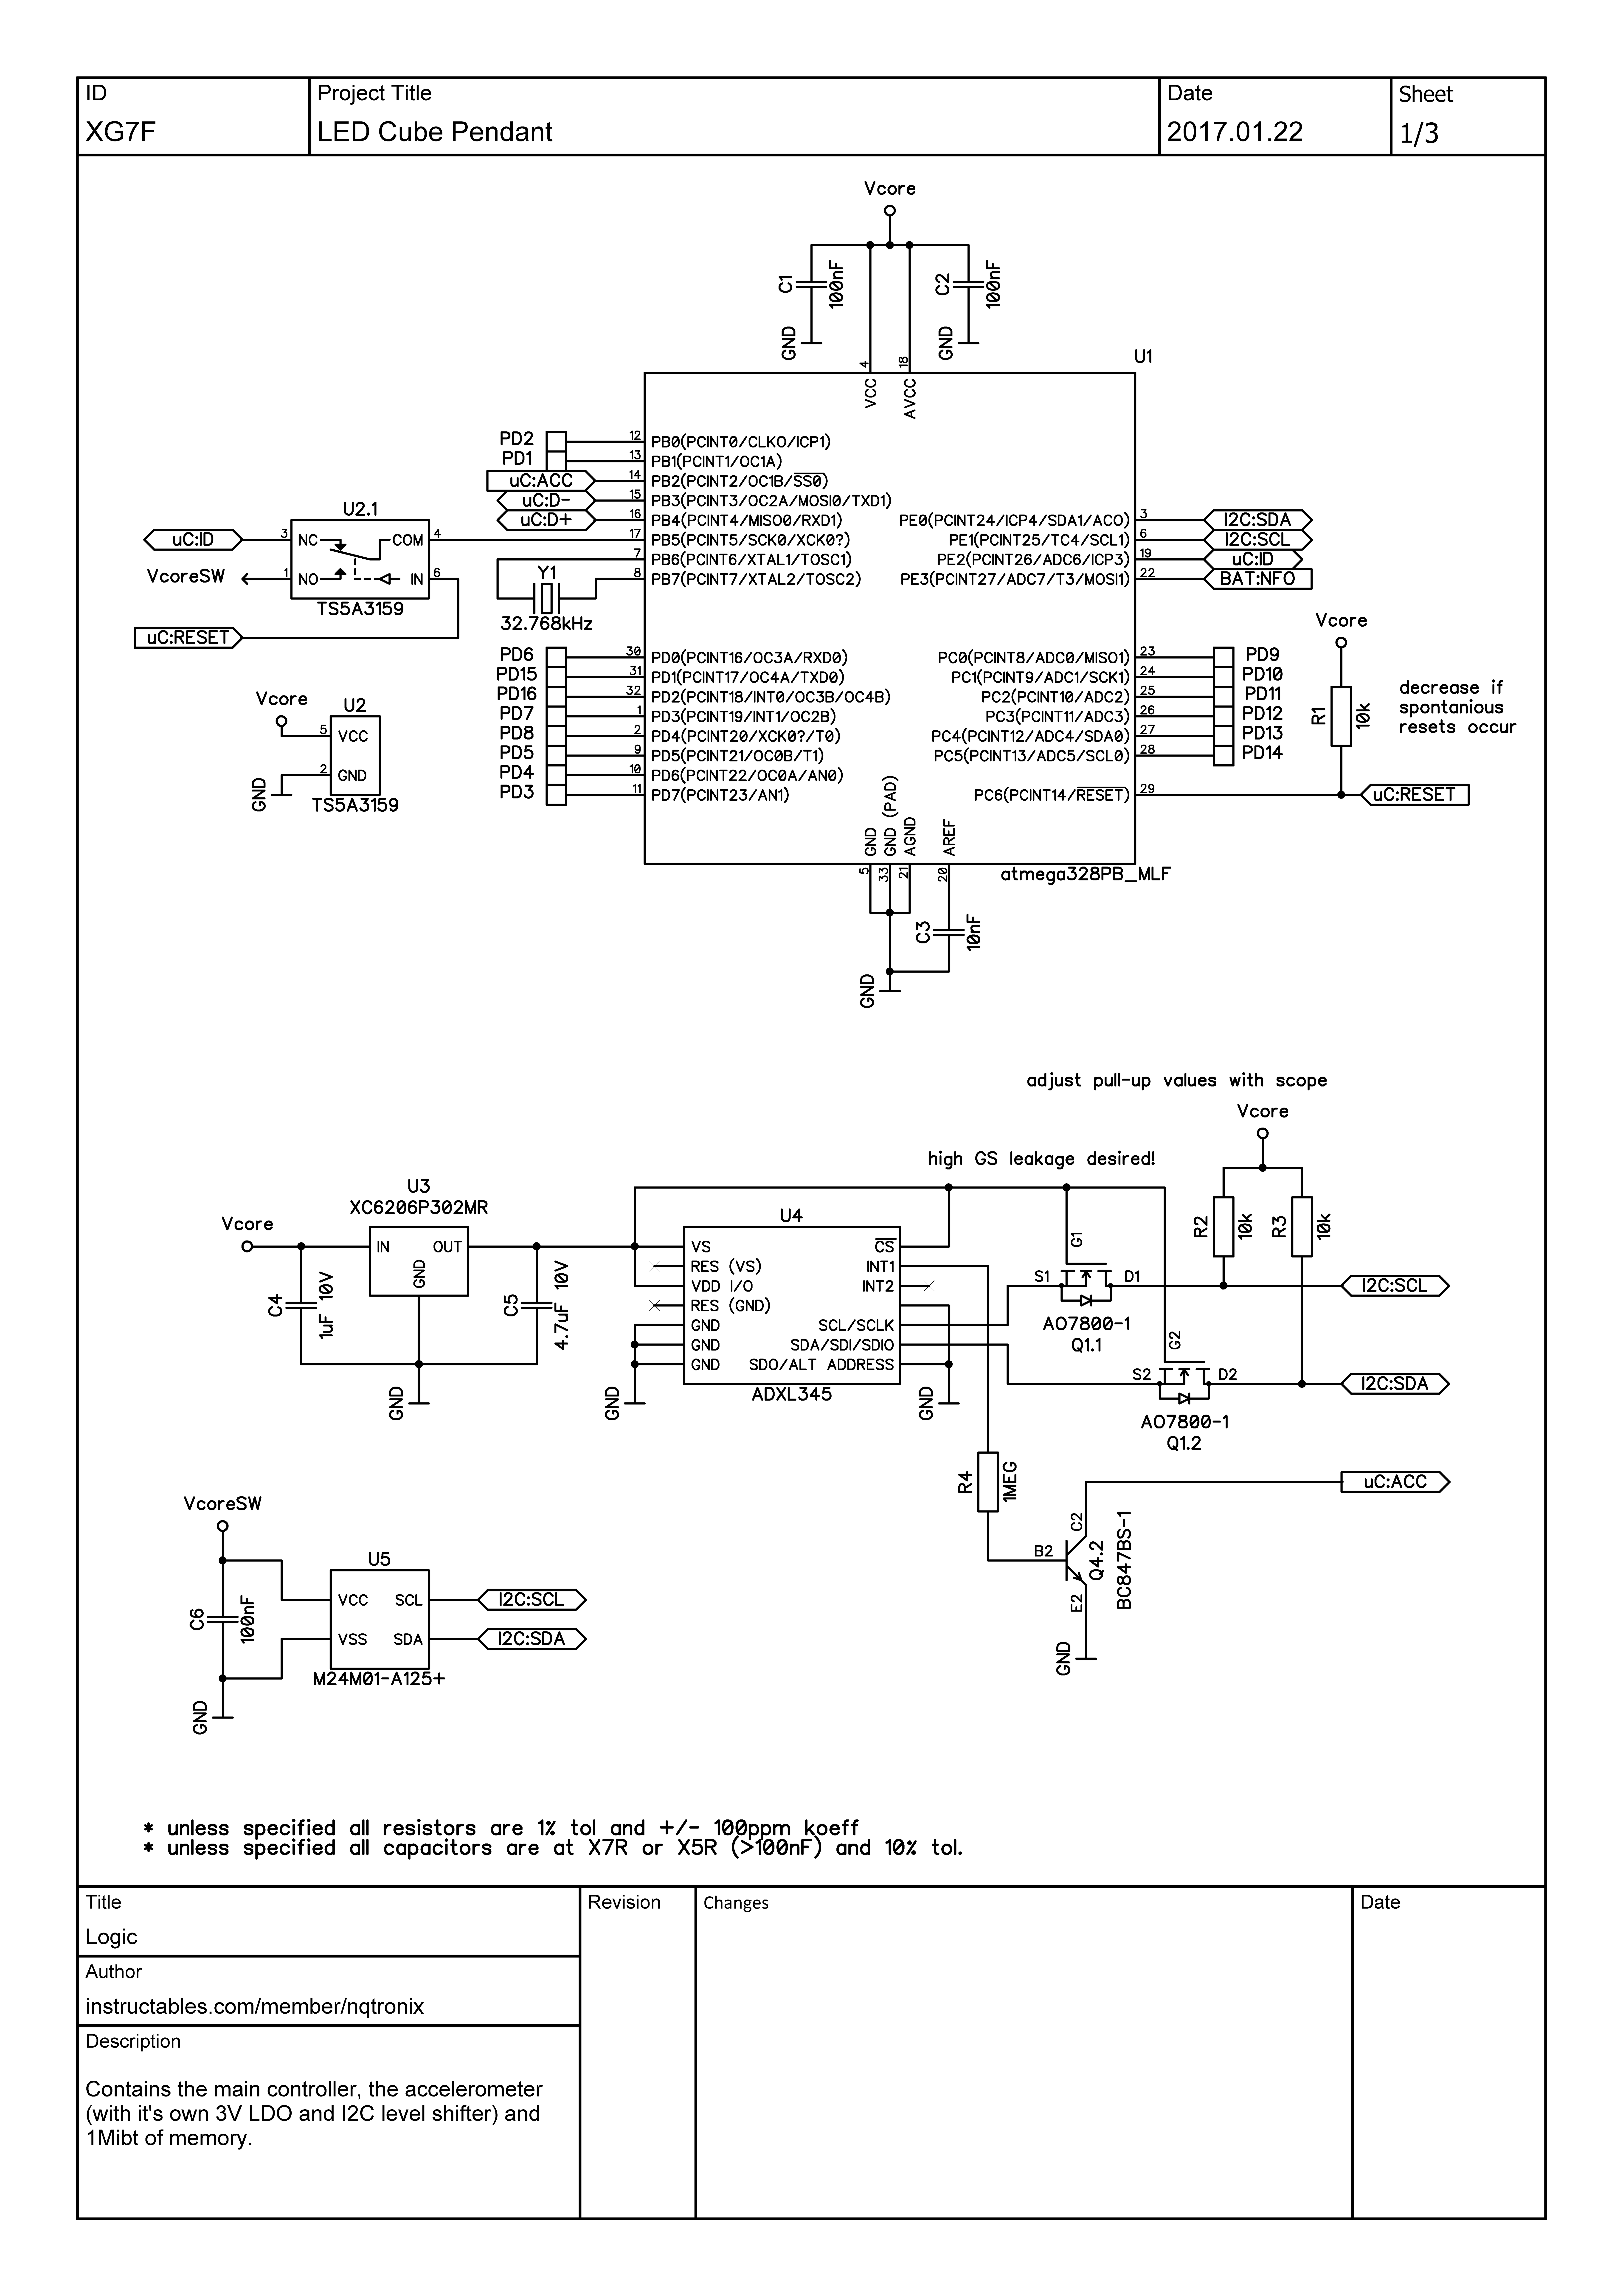 iGA.2.1 - schematic XG7F.png